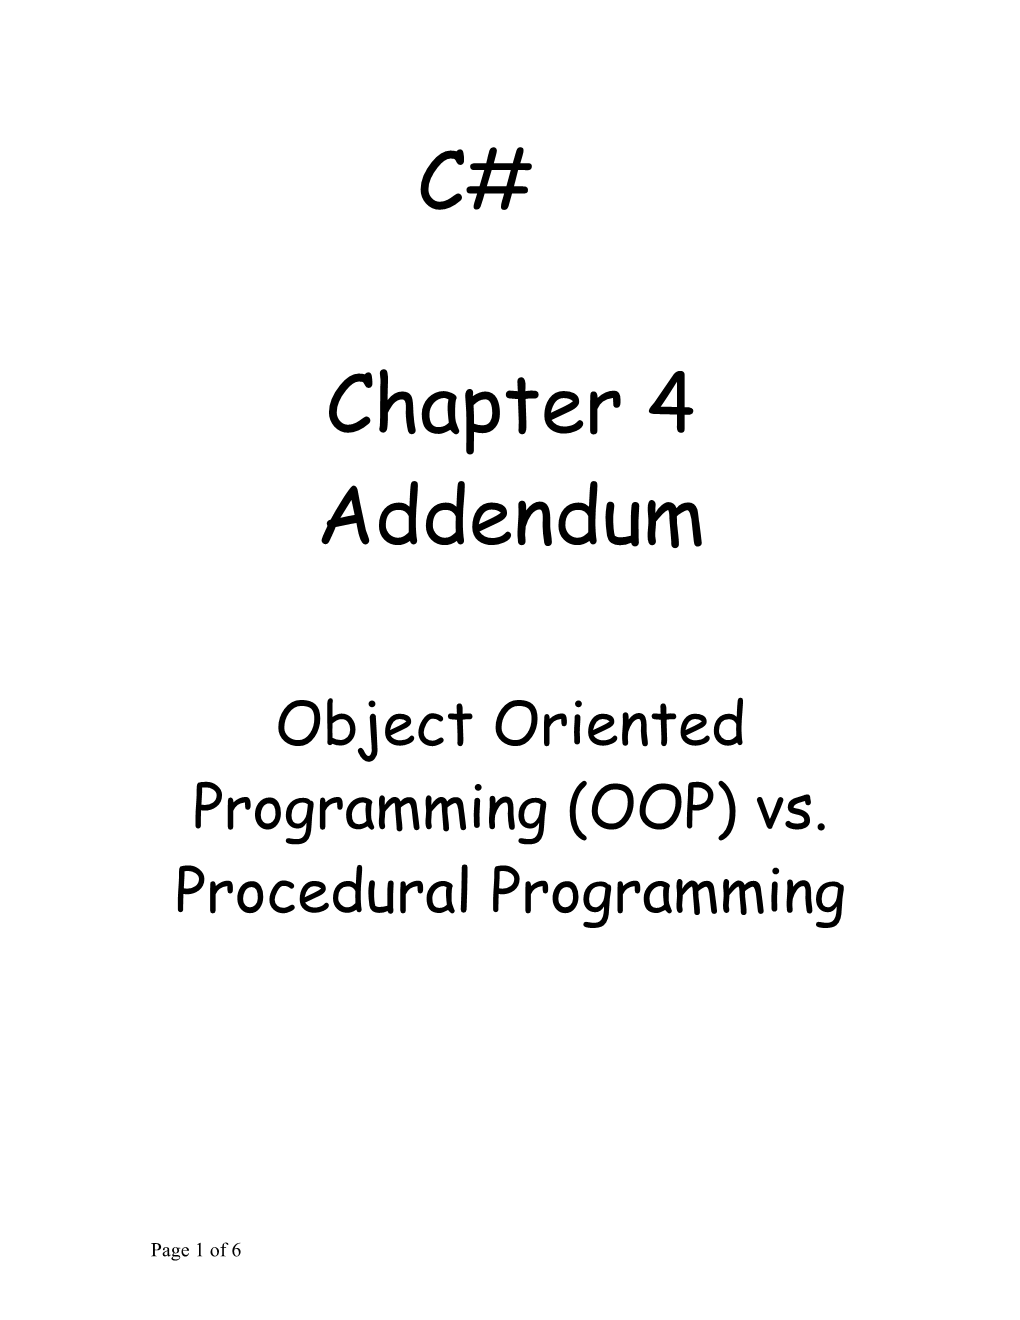 Object Oriented Programming (OOP) Vs. Procedural Programming